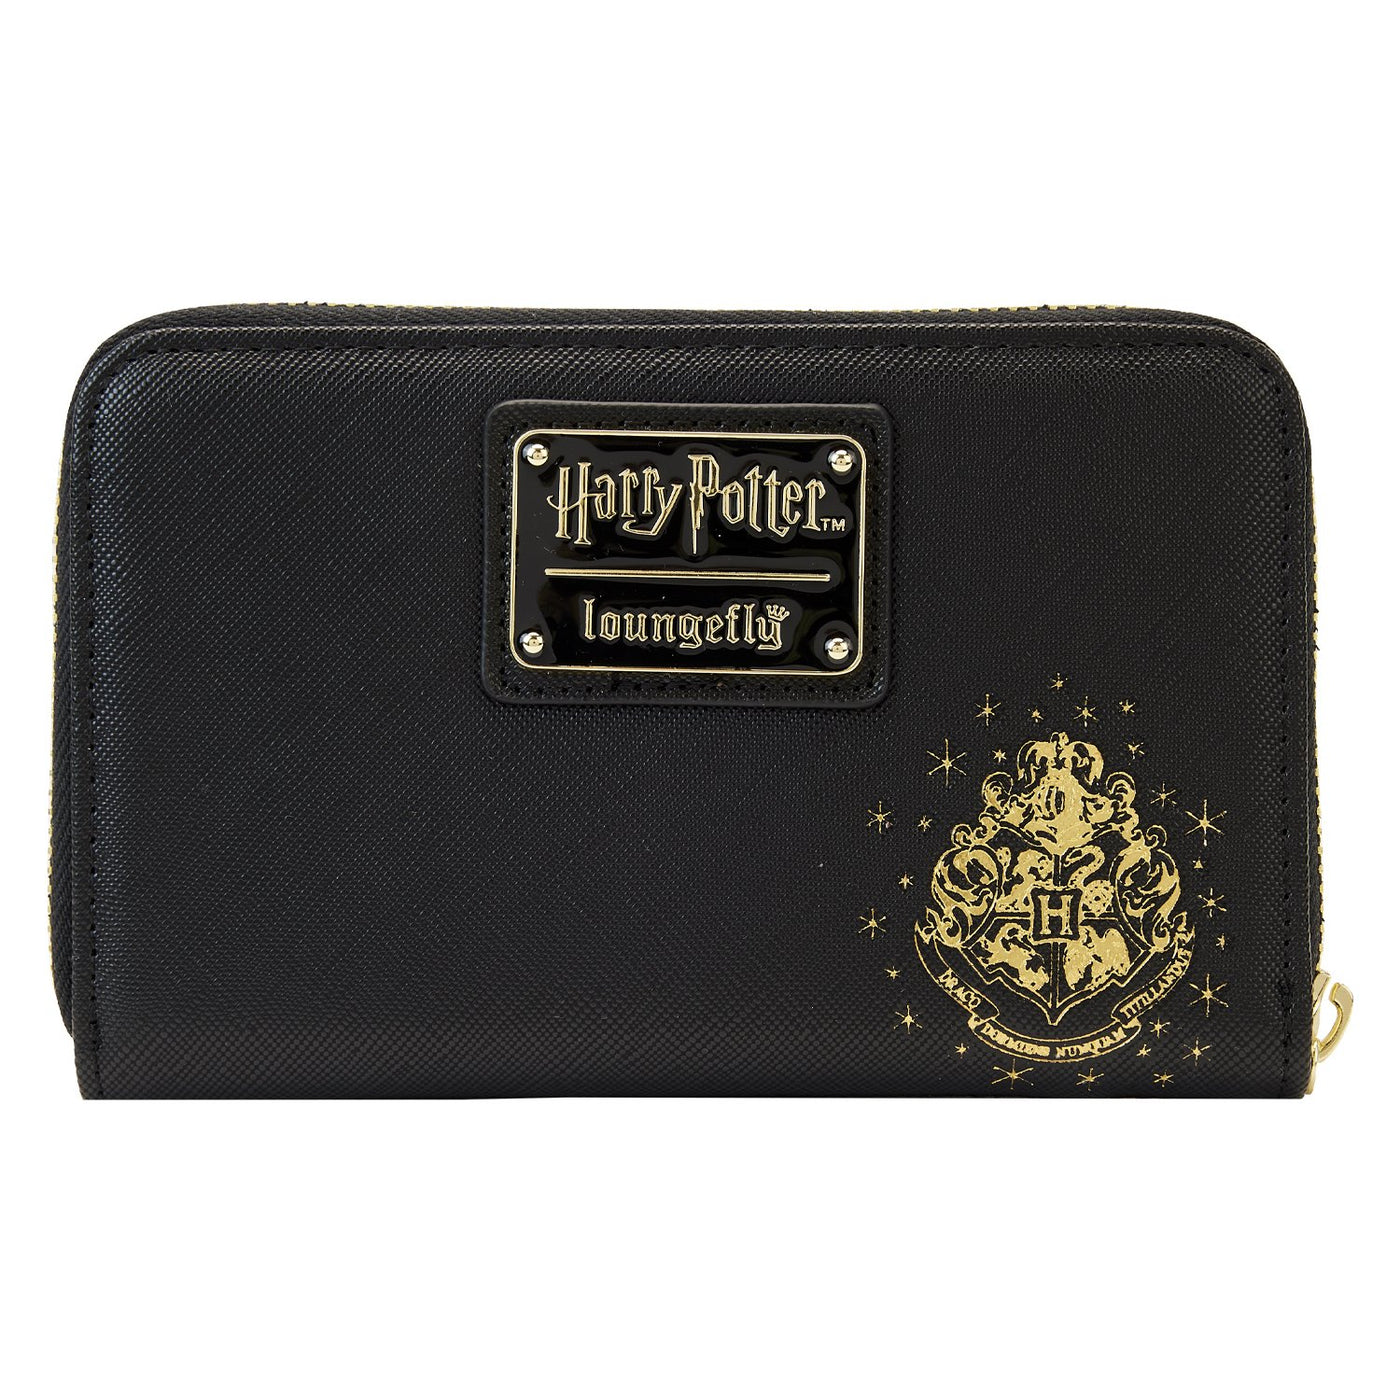 671803452169 - Loungefly Harry Potter Prisoner of Azkaban Poster Zip-Around Wallet - Back